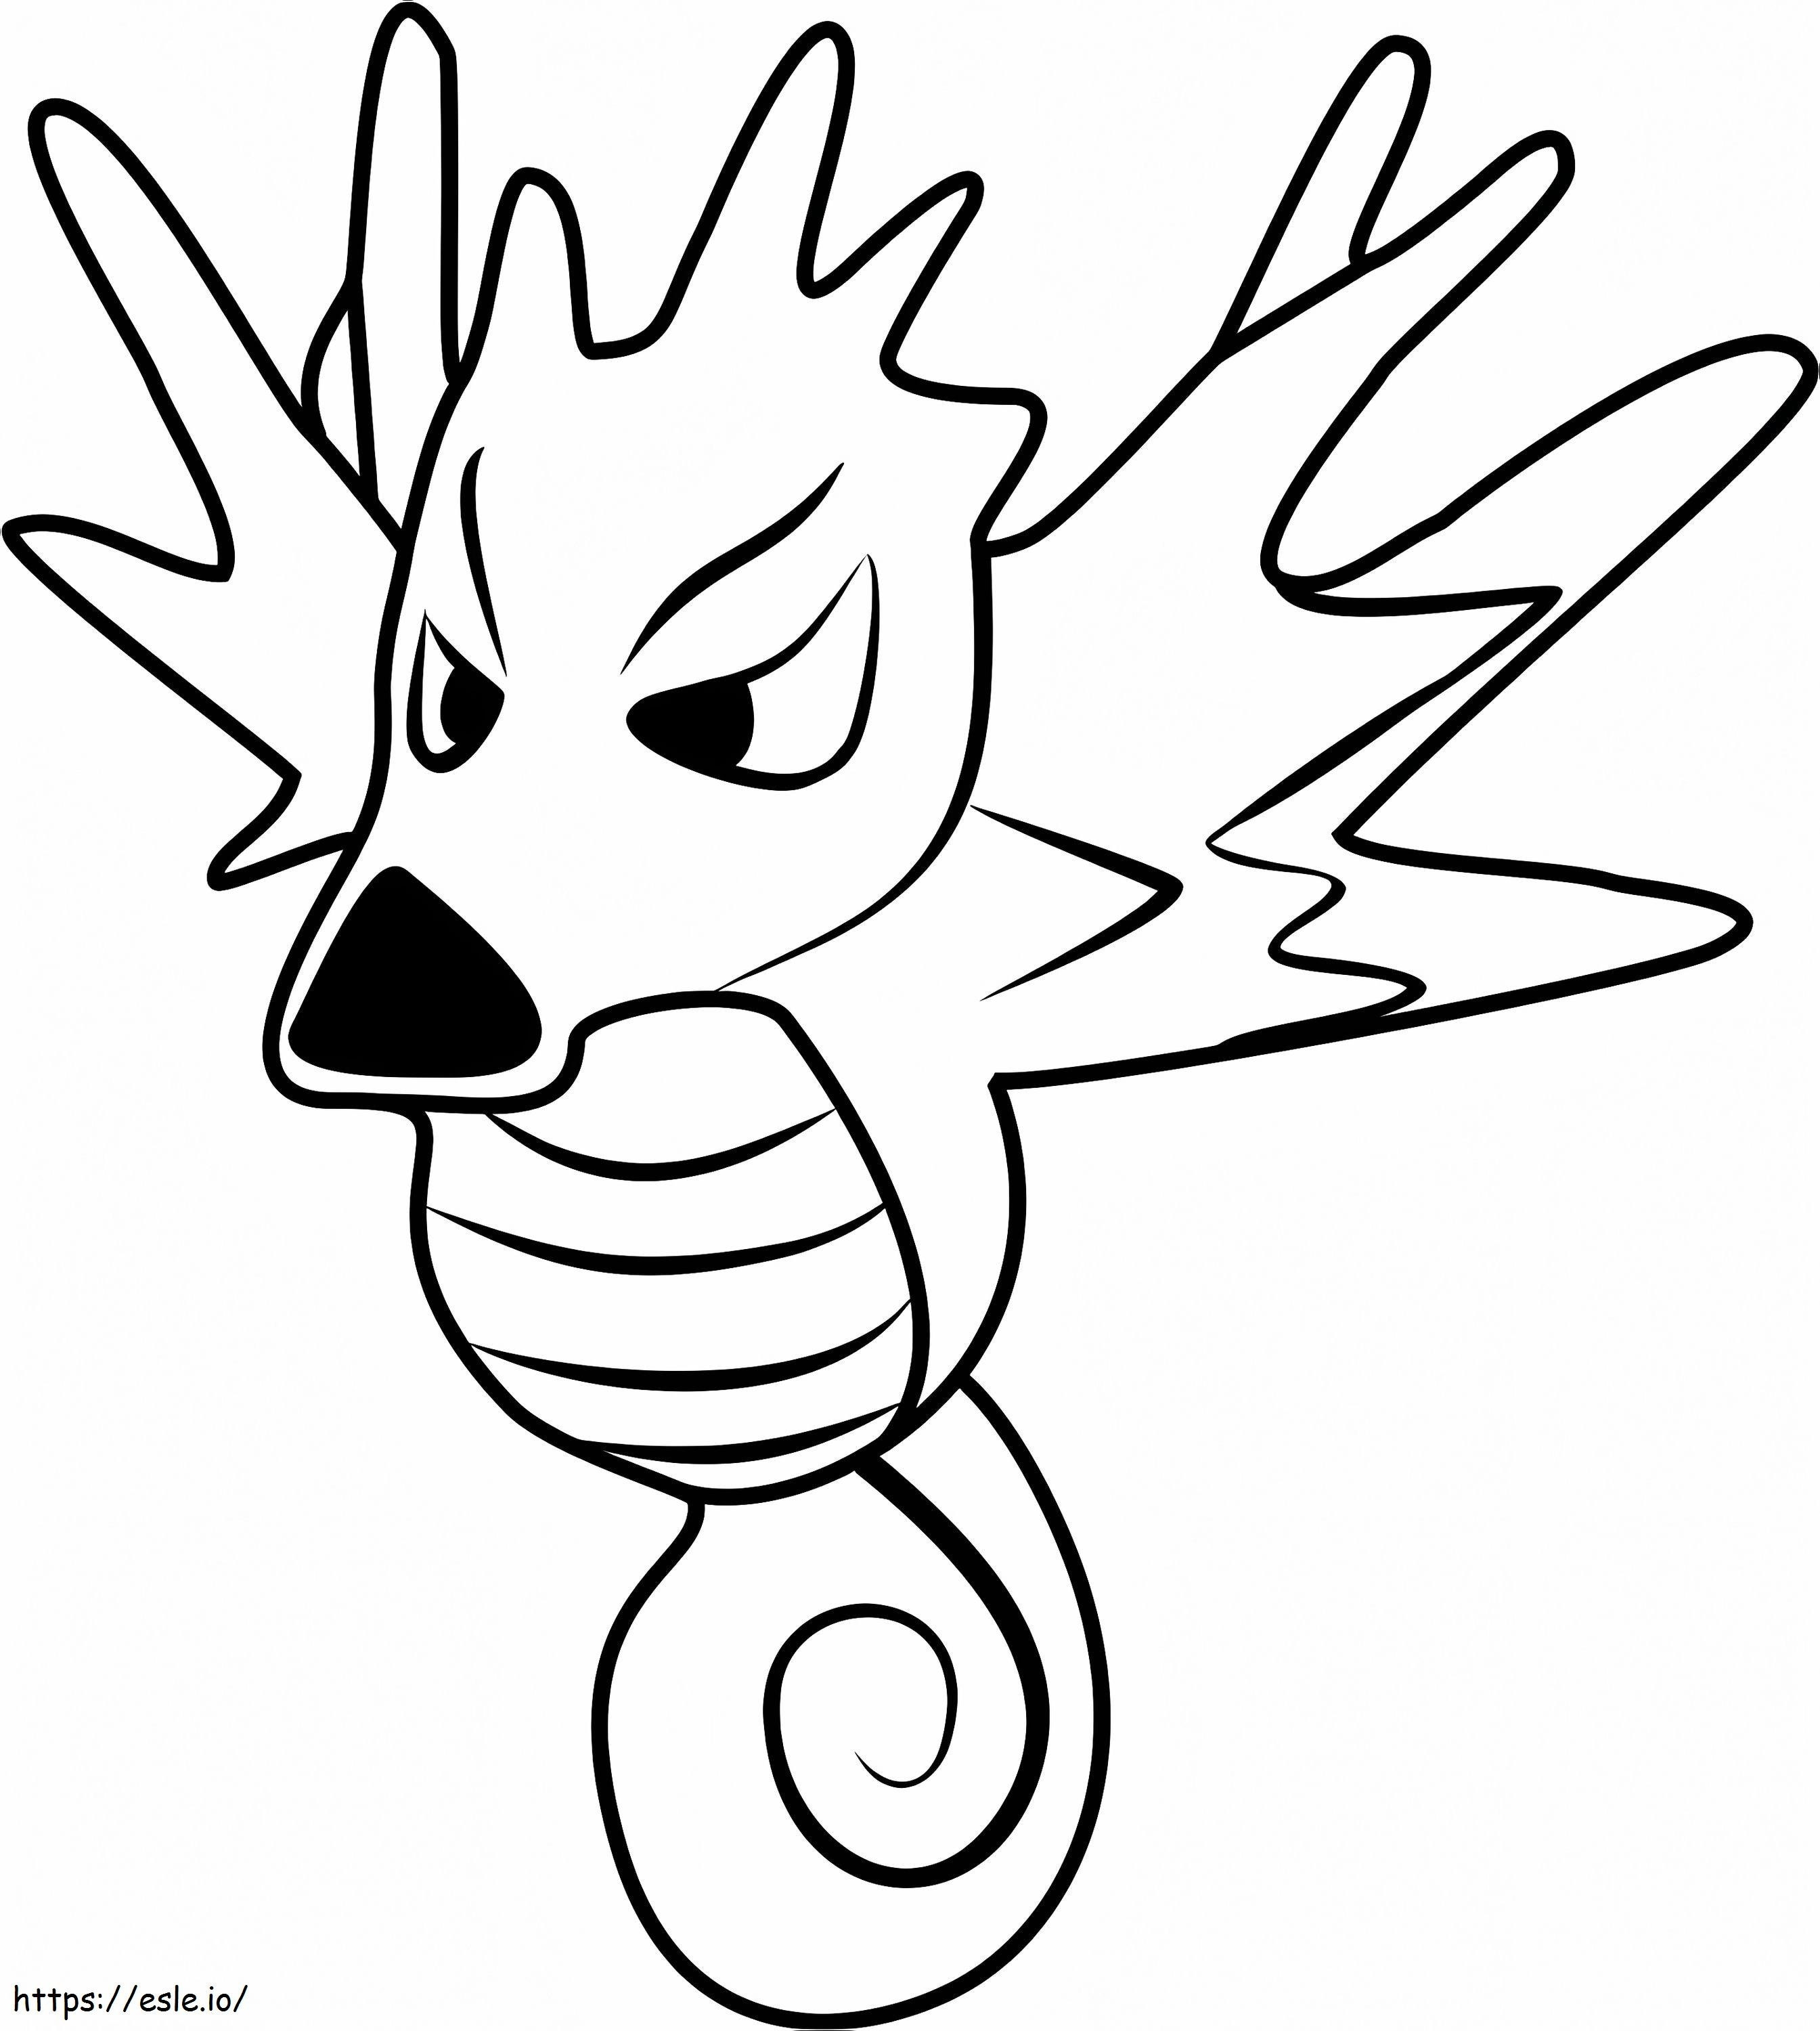 1530328809 Seadra Pokemon Go1 coloring page